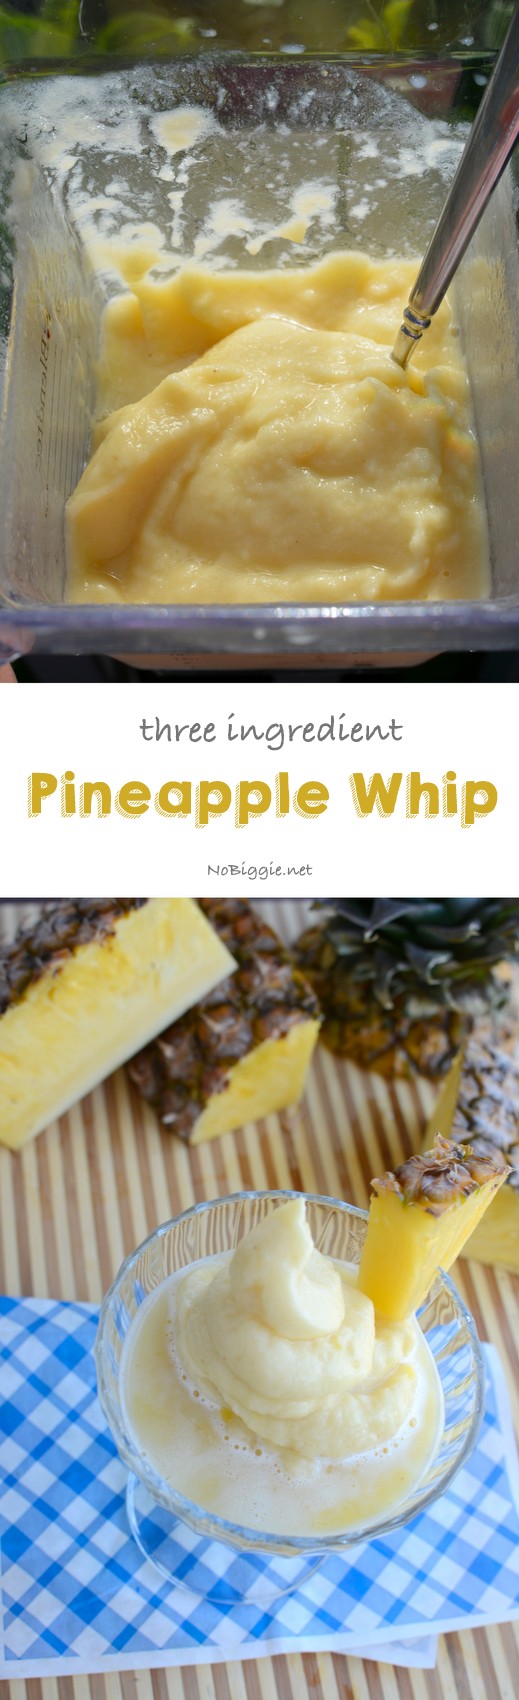 three ingredient pineapple whip | so good and so easy! - NoBiggie.net